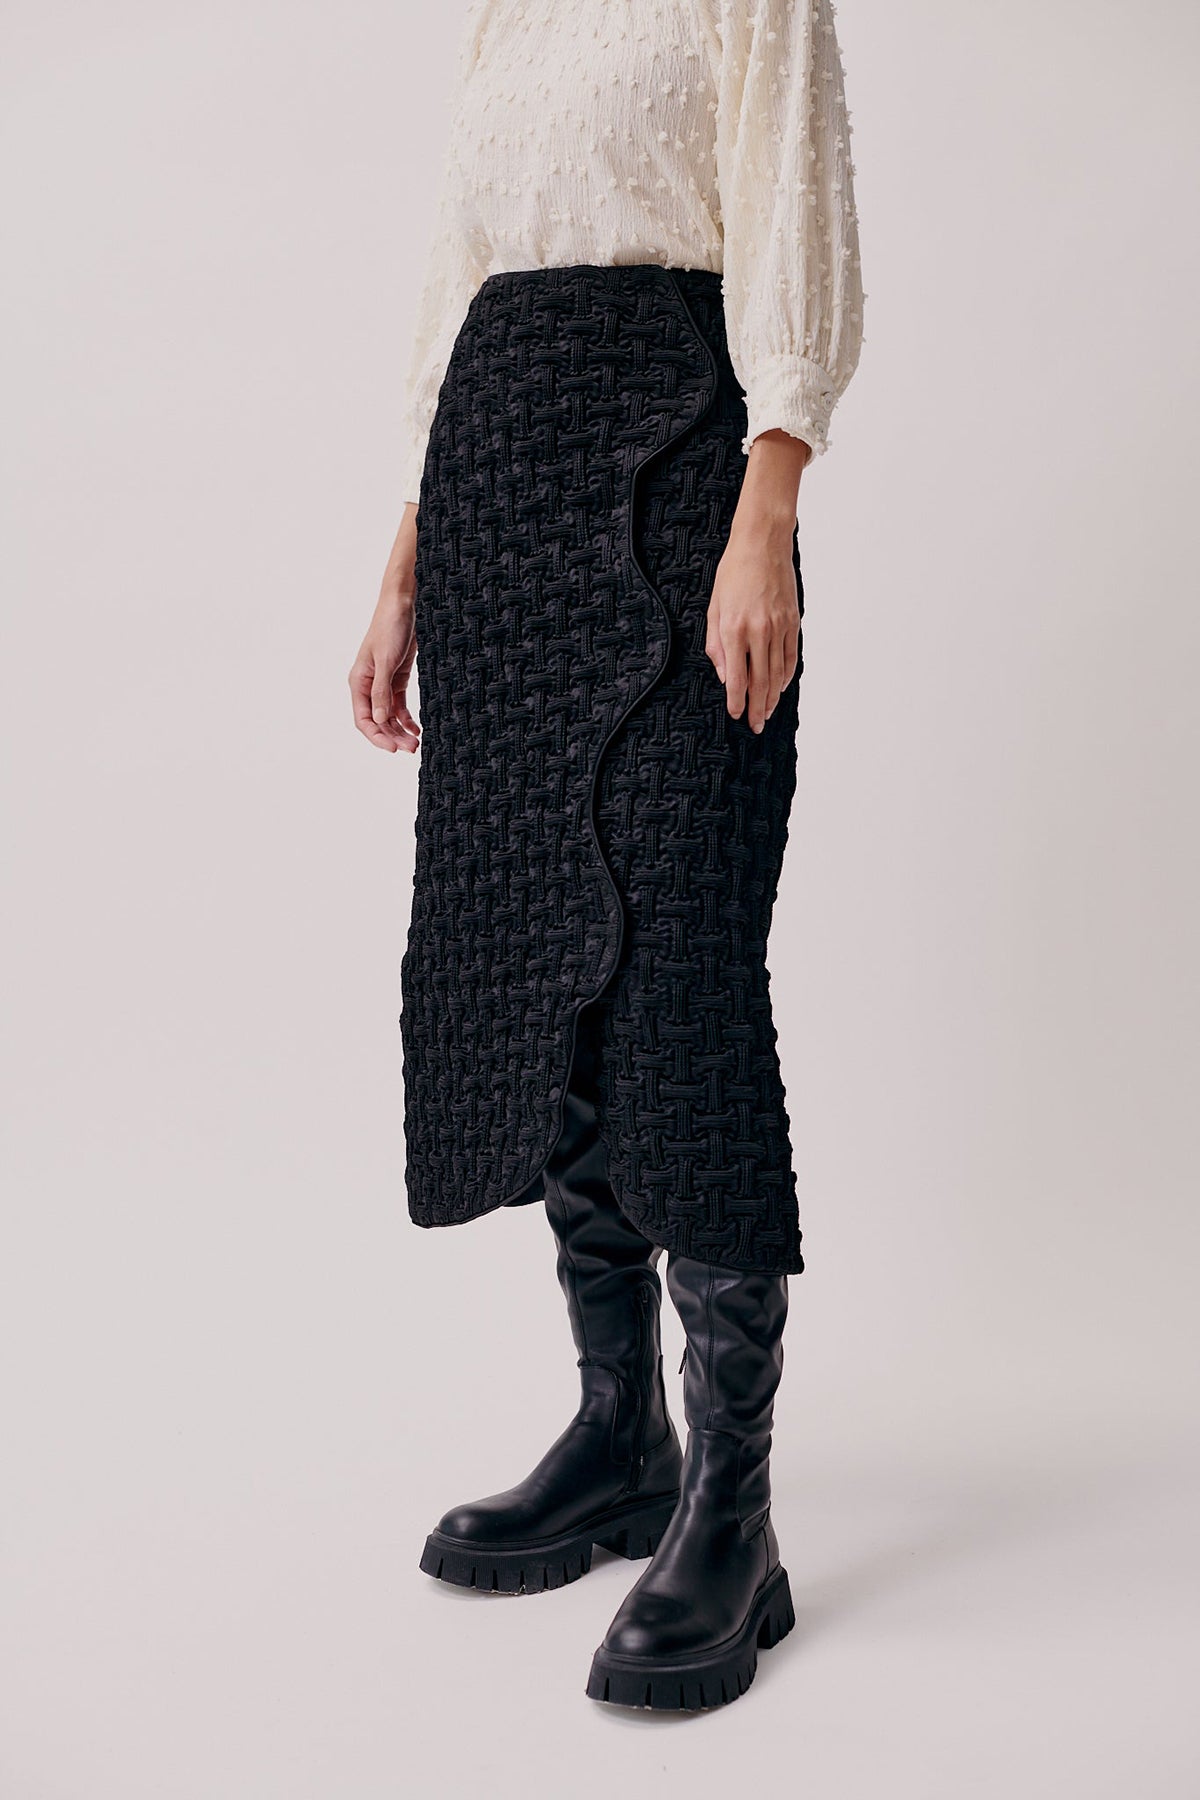 Ambre Skirt - Black by Hofmann Copenhagen